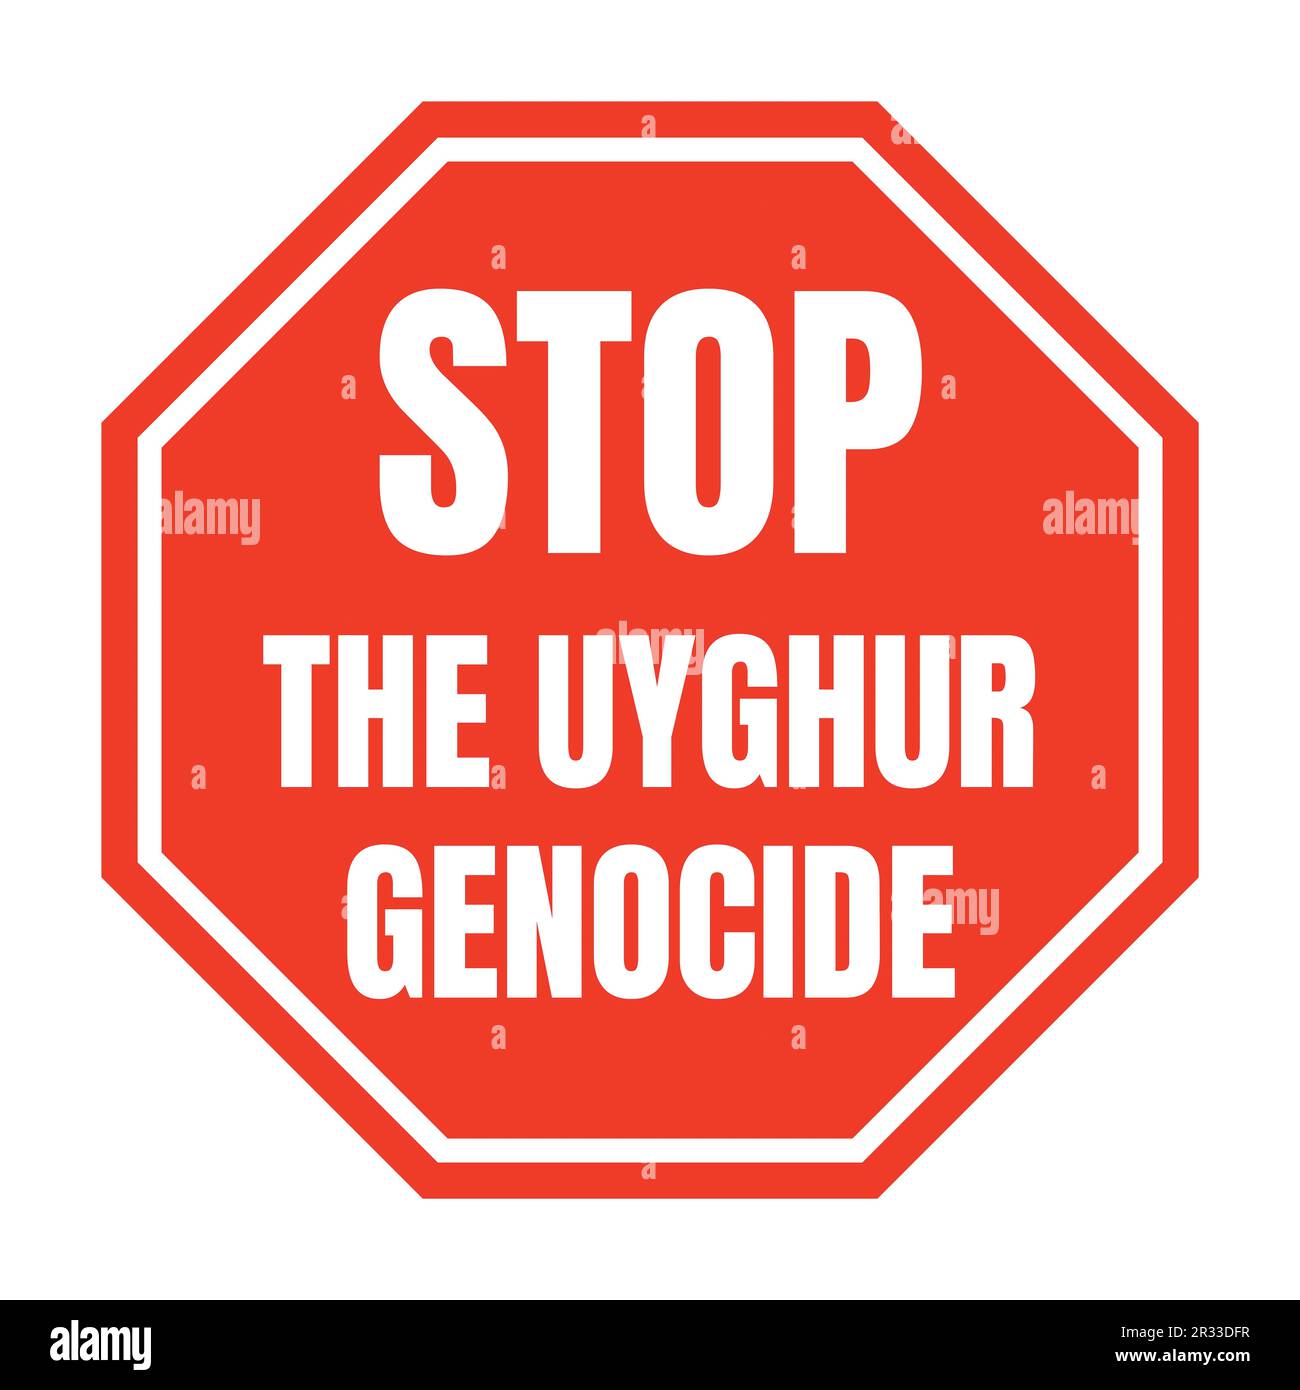 Stop the Uyghur genocide symbol icon Stock Photo